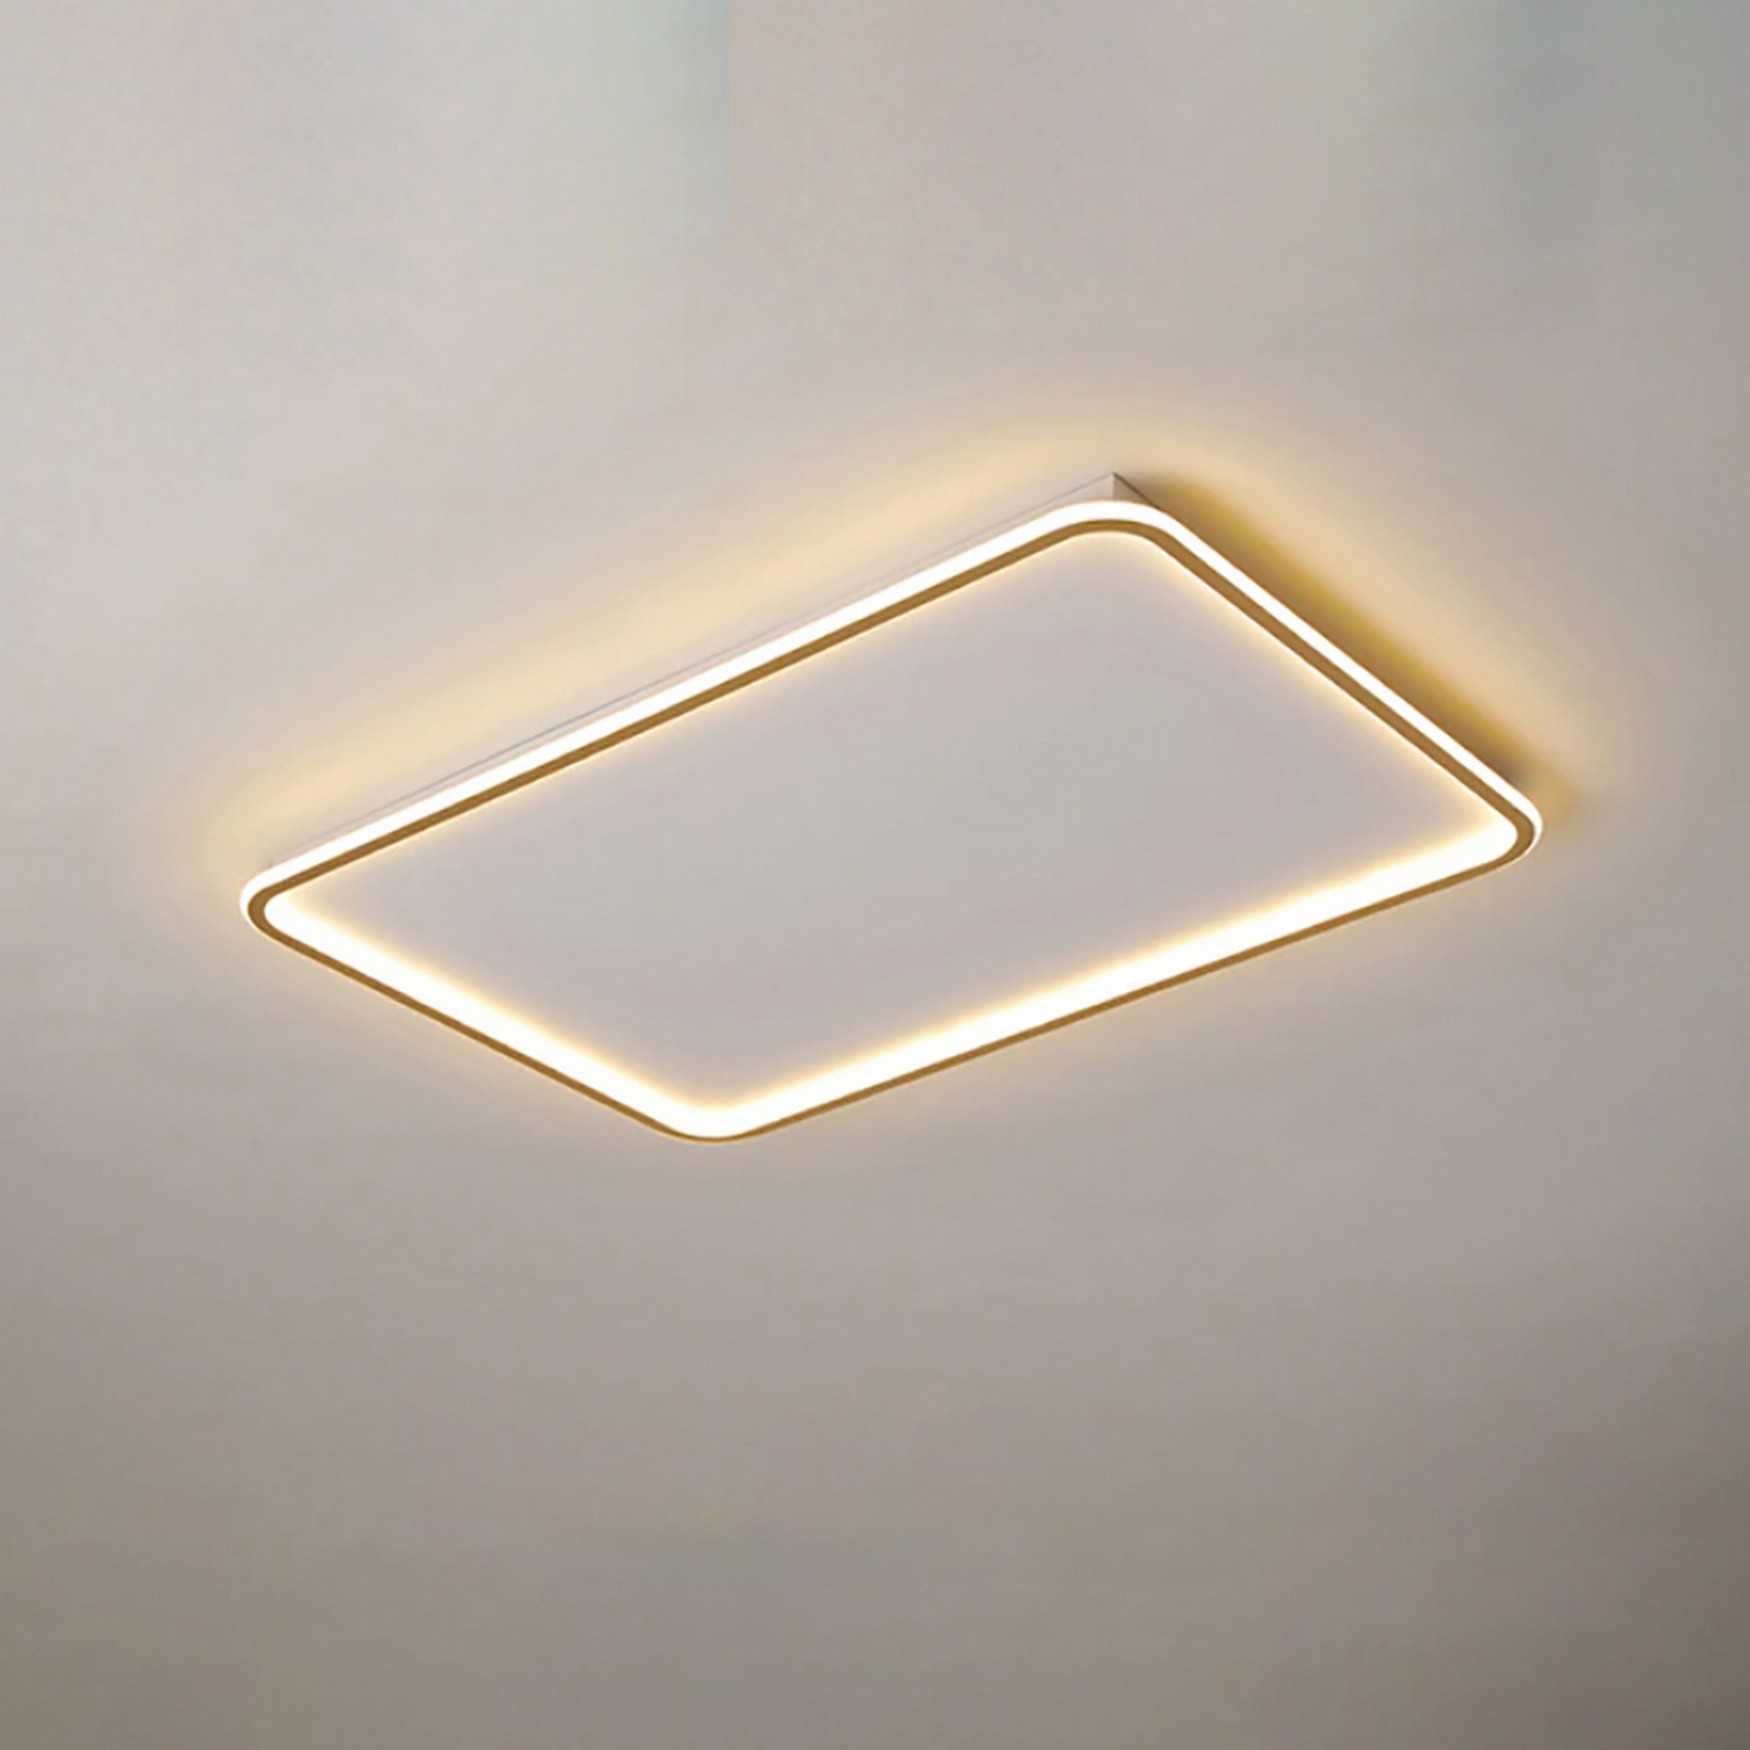 BASIS LED Ceiling Light TRA54113 60*40cm 